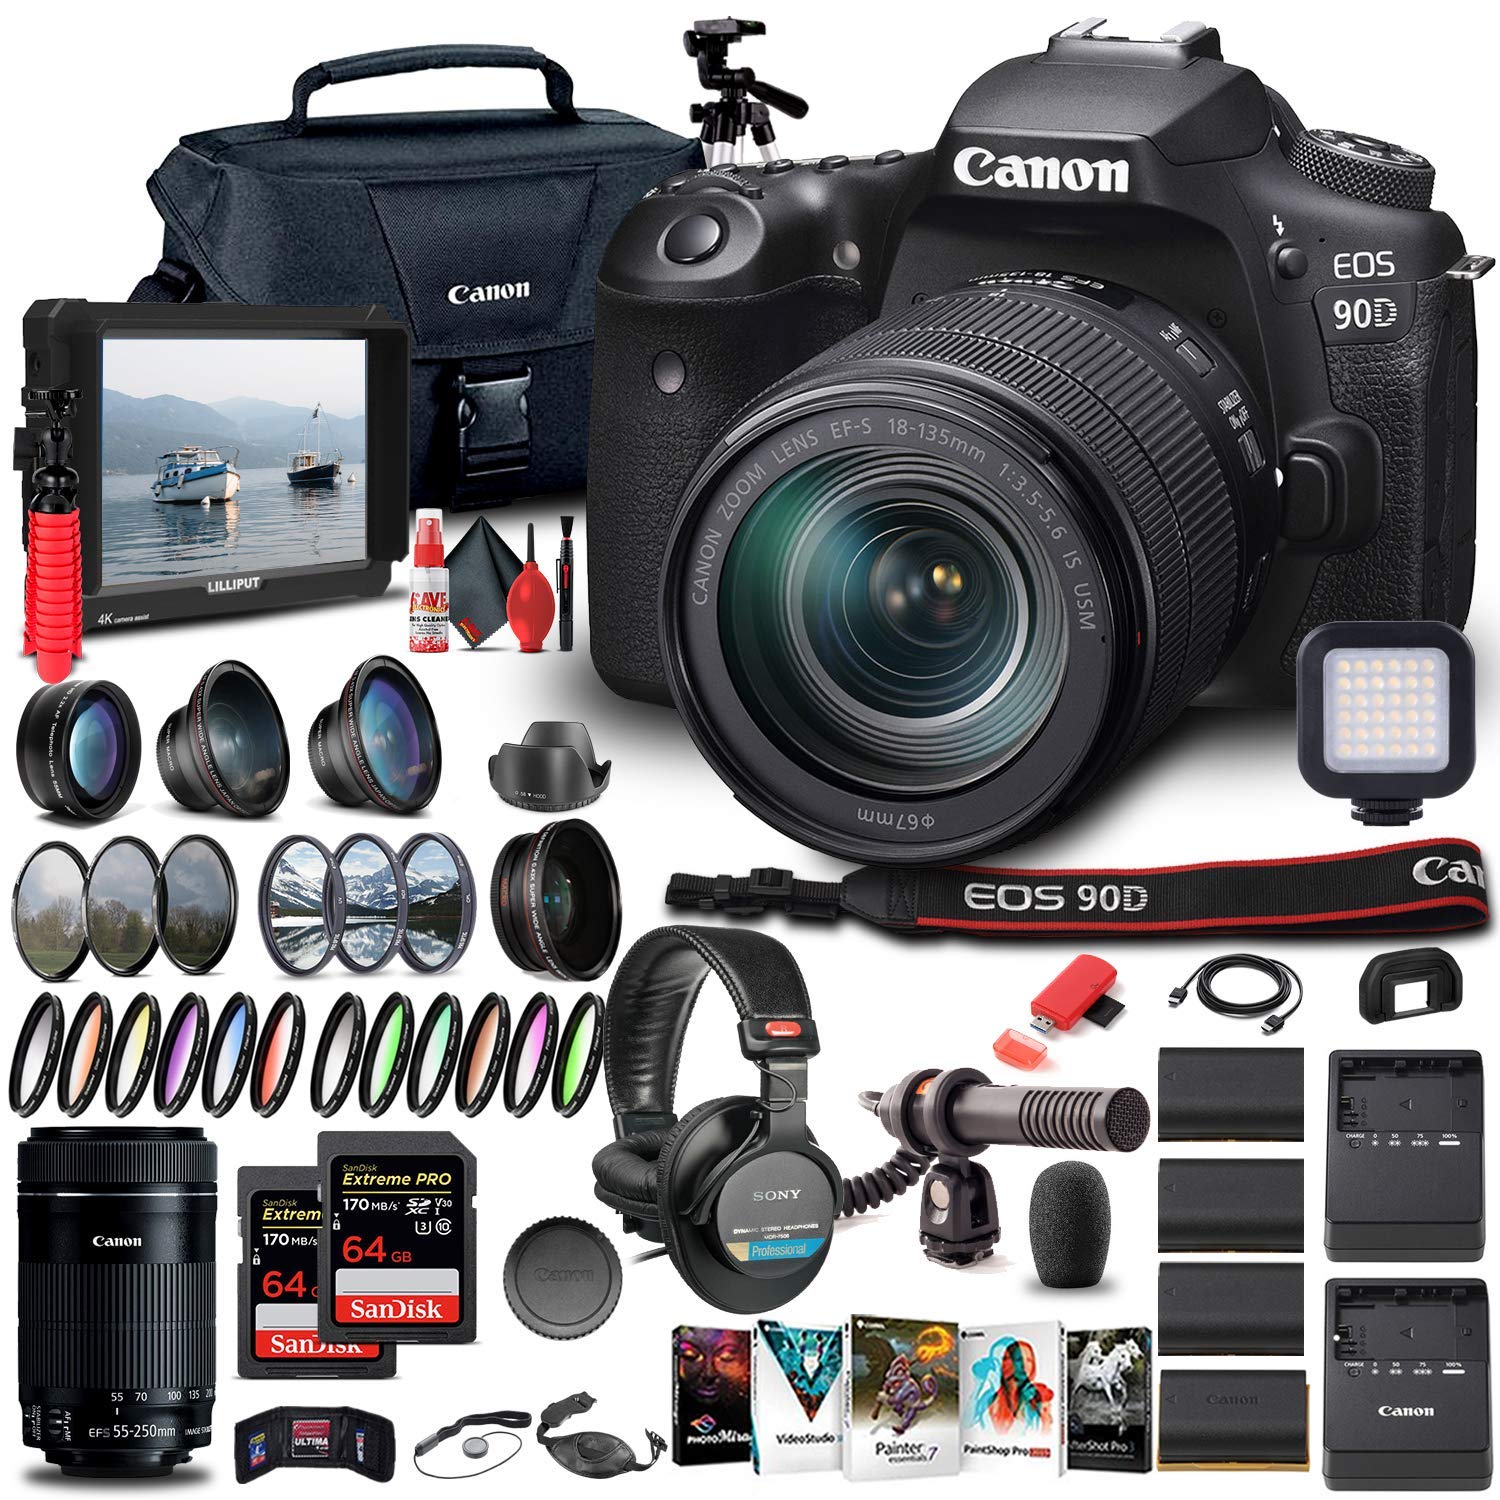 Canon EOS 90D DSLR Camera with 18-135mm Lens (3616C016) + EF-S 55-250mm Lens + 4K Monitor + Pro Headphones + Pro Mic + 2 x 64GB Memory Card + Case + Corel Photo Software + Pro Tripod + More (Renewed)